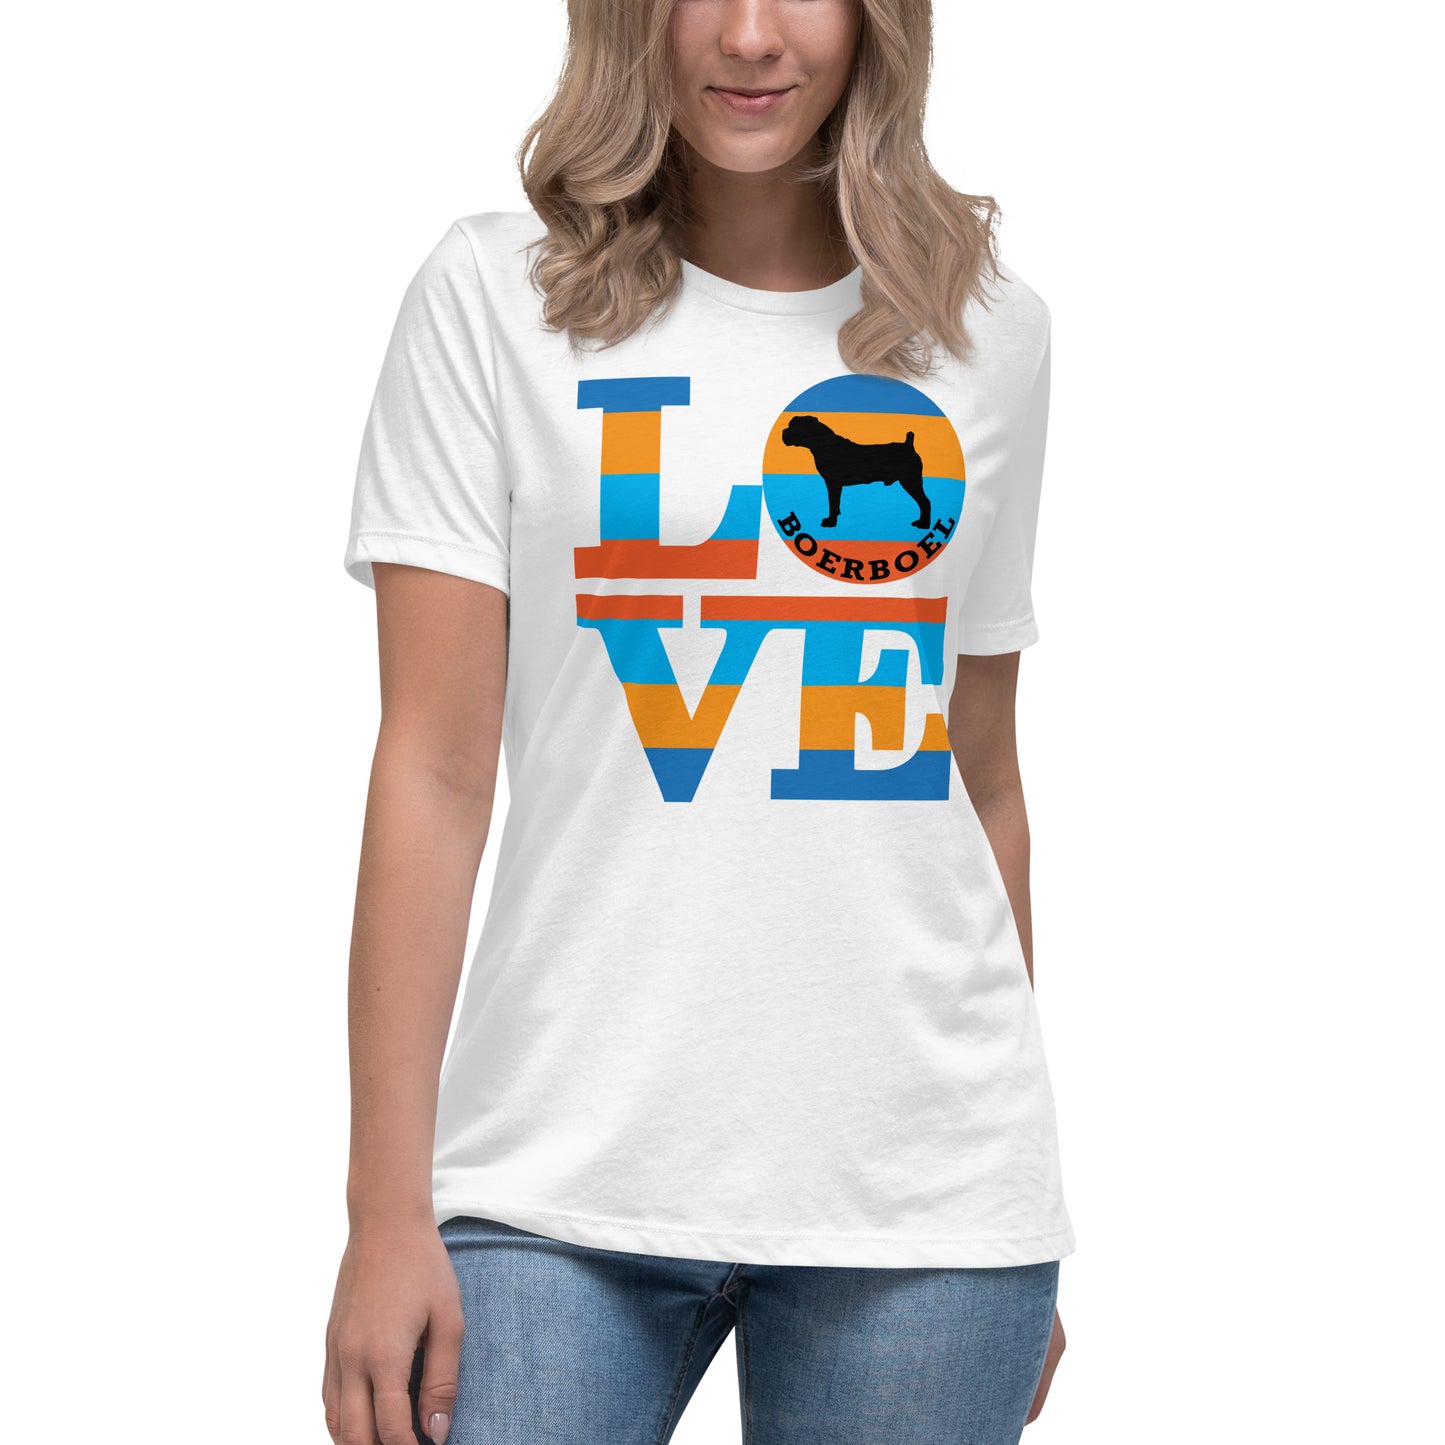 Boerboel Love women’s white t-shirt by Dog Artistry.